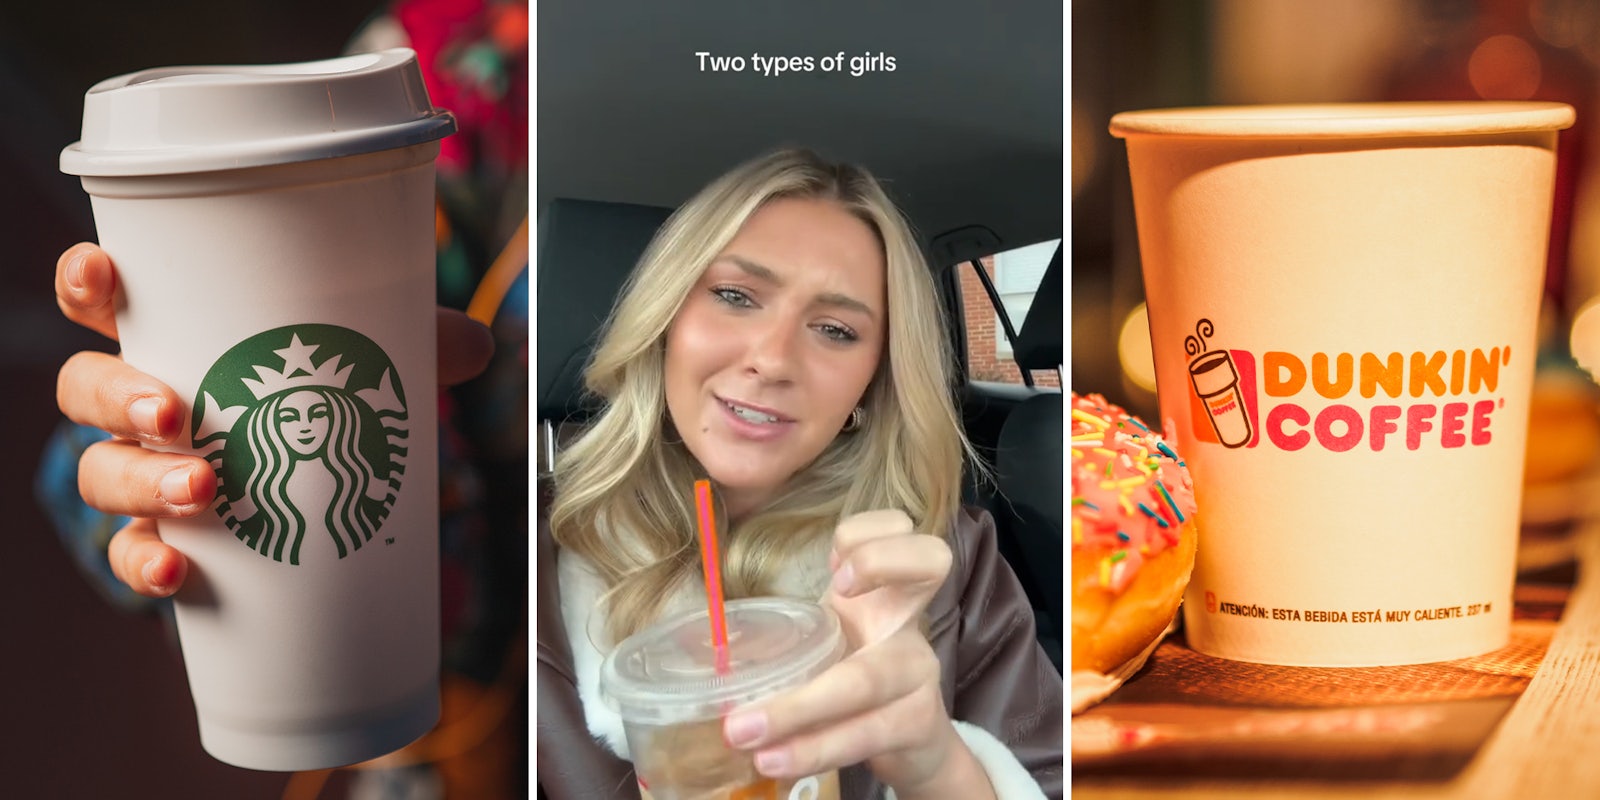 Dunkin customer says there’s 2 types of girls: Starbucks vs. Dunkin.